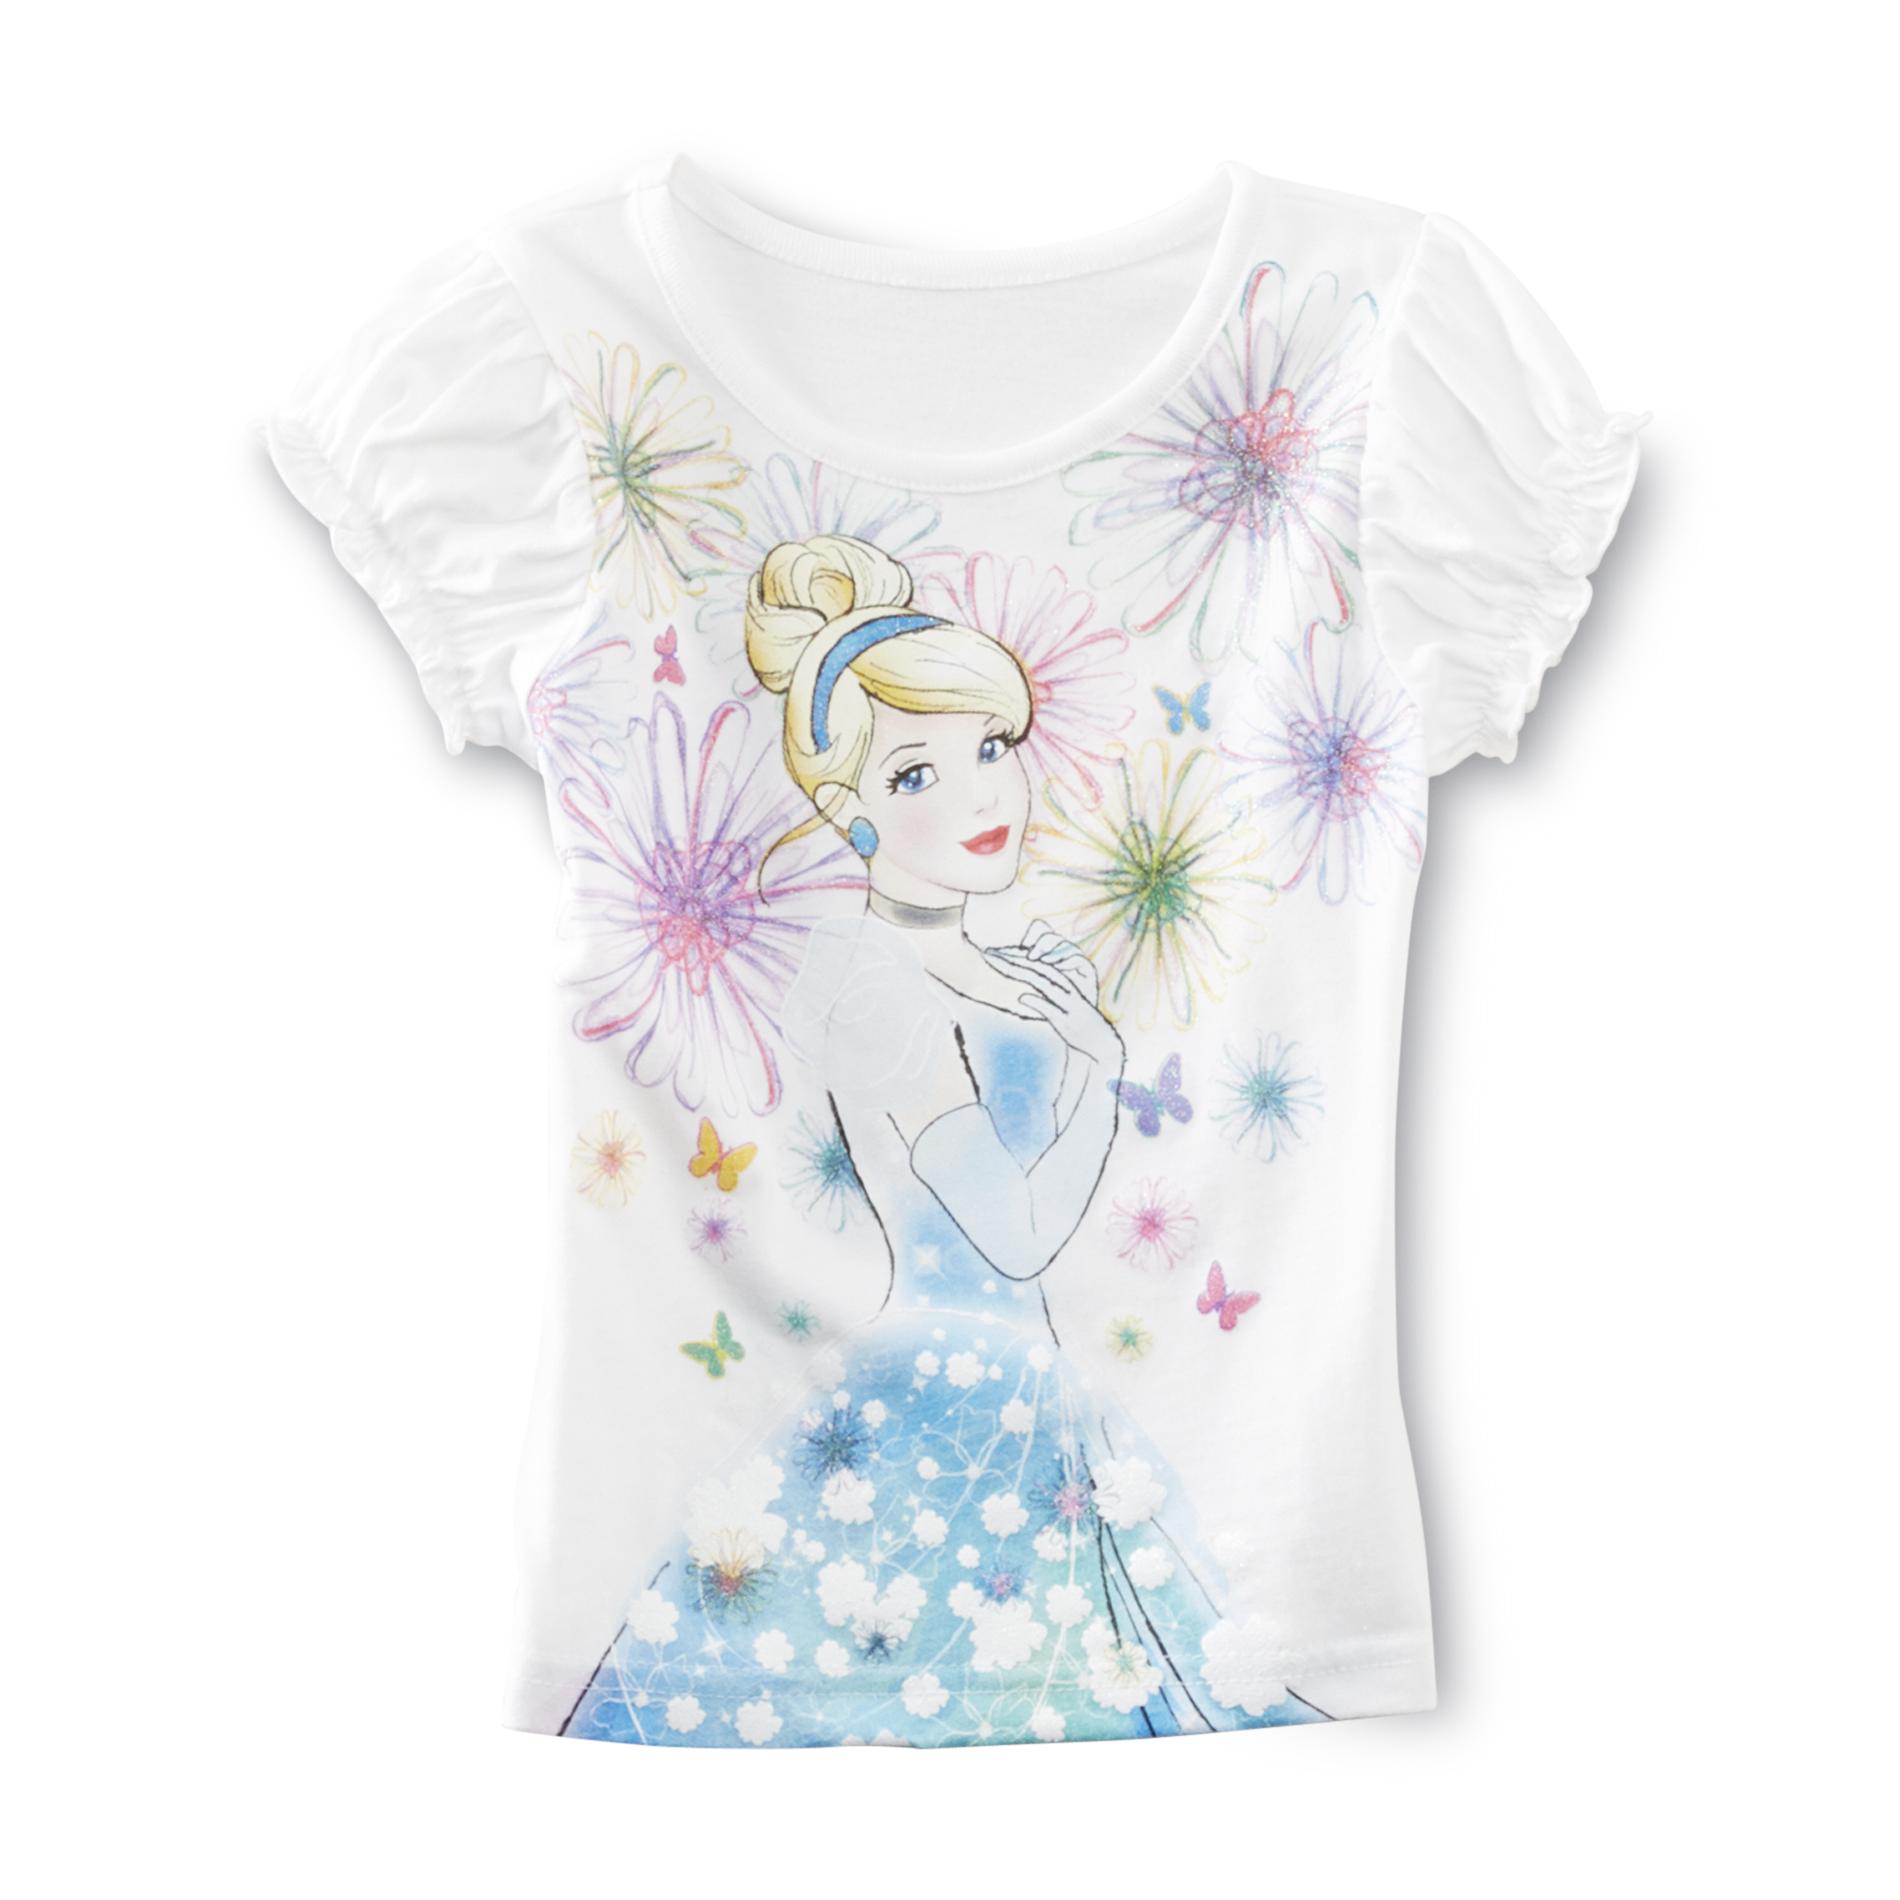 Disney Cinderella Toddler Girl's Graphic Top - Floral